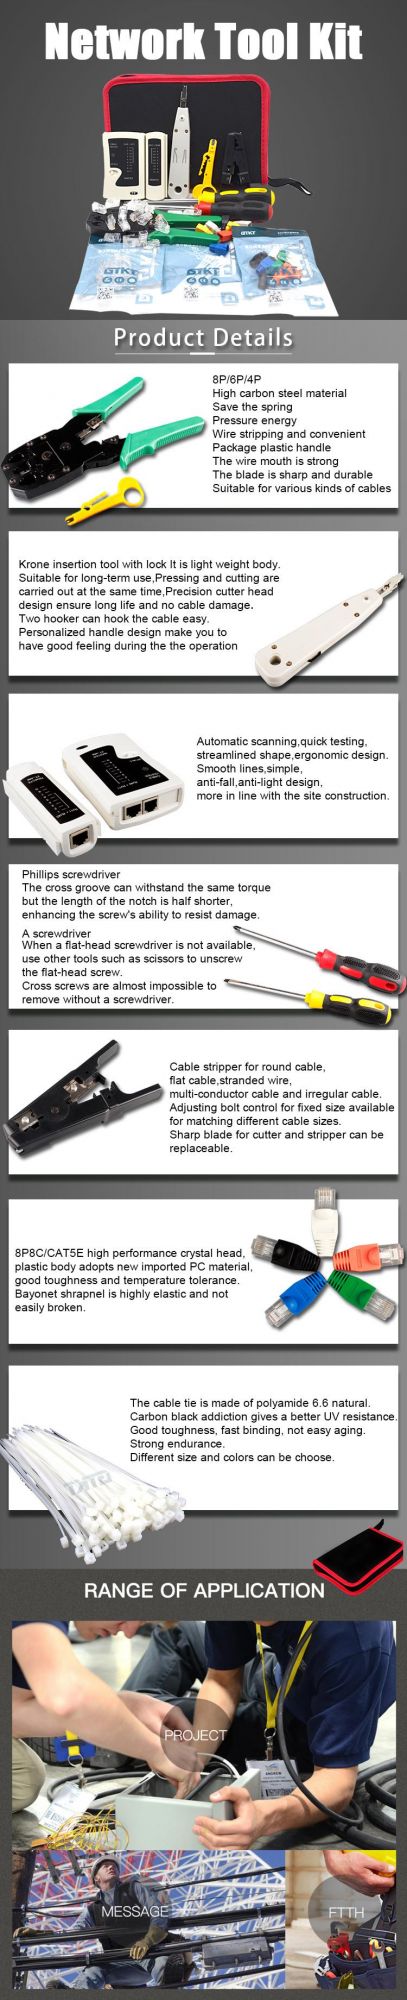 Gcabling Computer LAN Tester Hand Crimping RJ45 Connector Monoprice Professional Networking Tool Kit